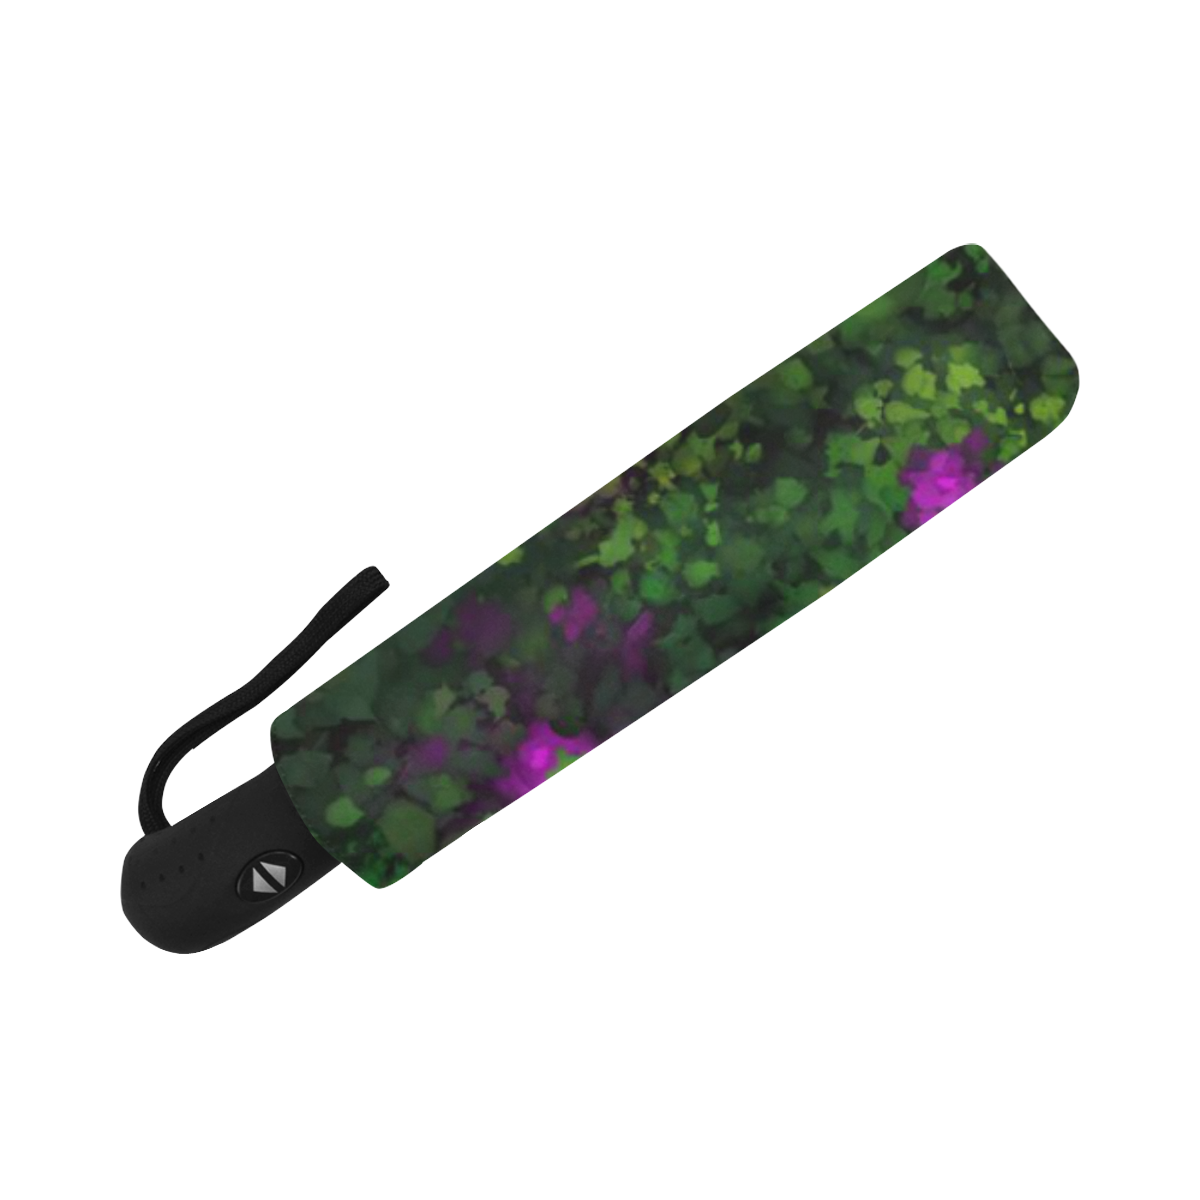 Wild Rose Garden, Oil painting. Red, purple, green Anti-UV Auto-Foldable Umbrella (U09)